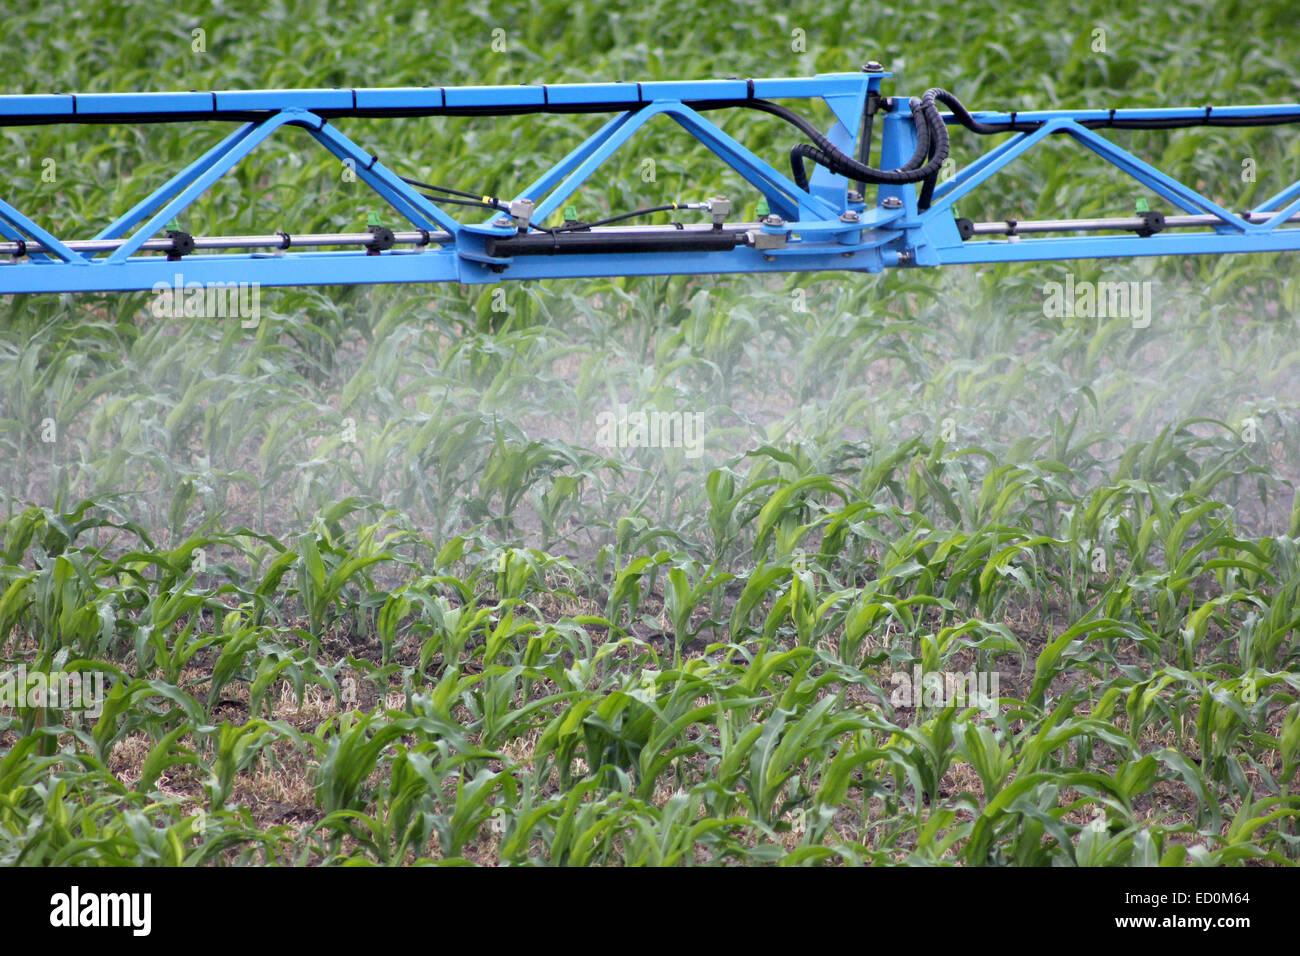 The sprayer treats wheat against diseases Stock Photo